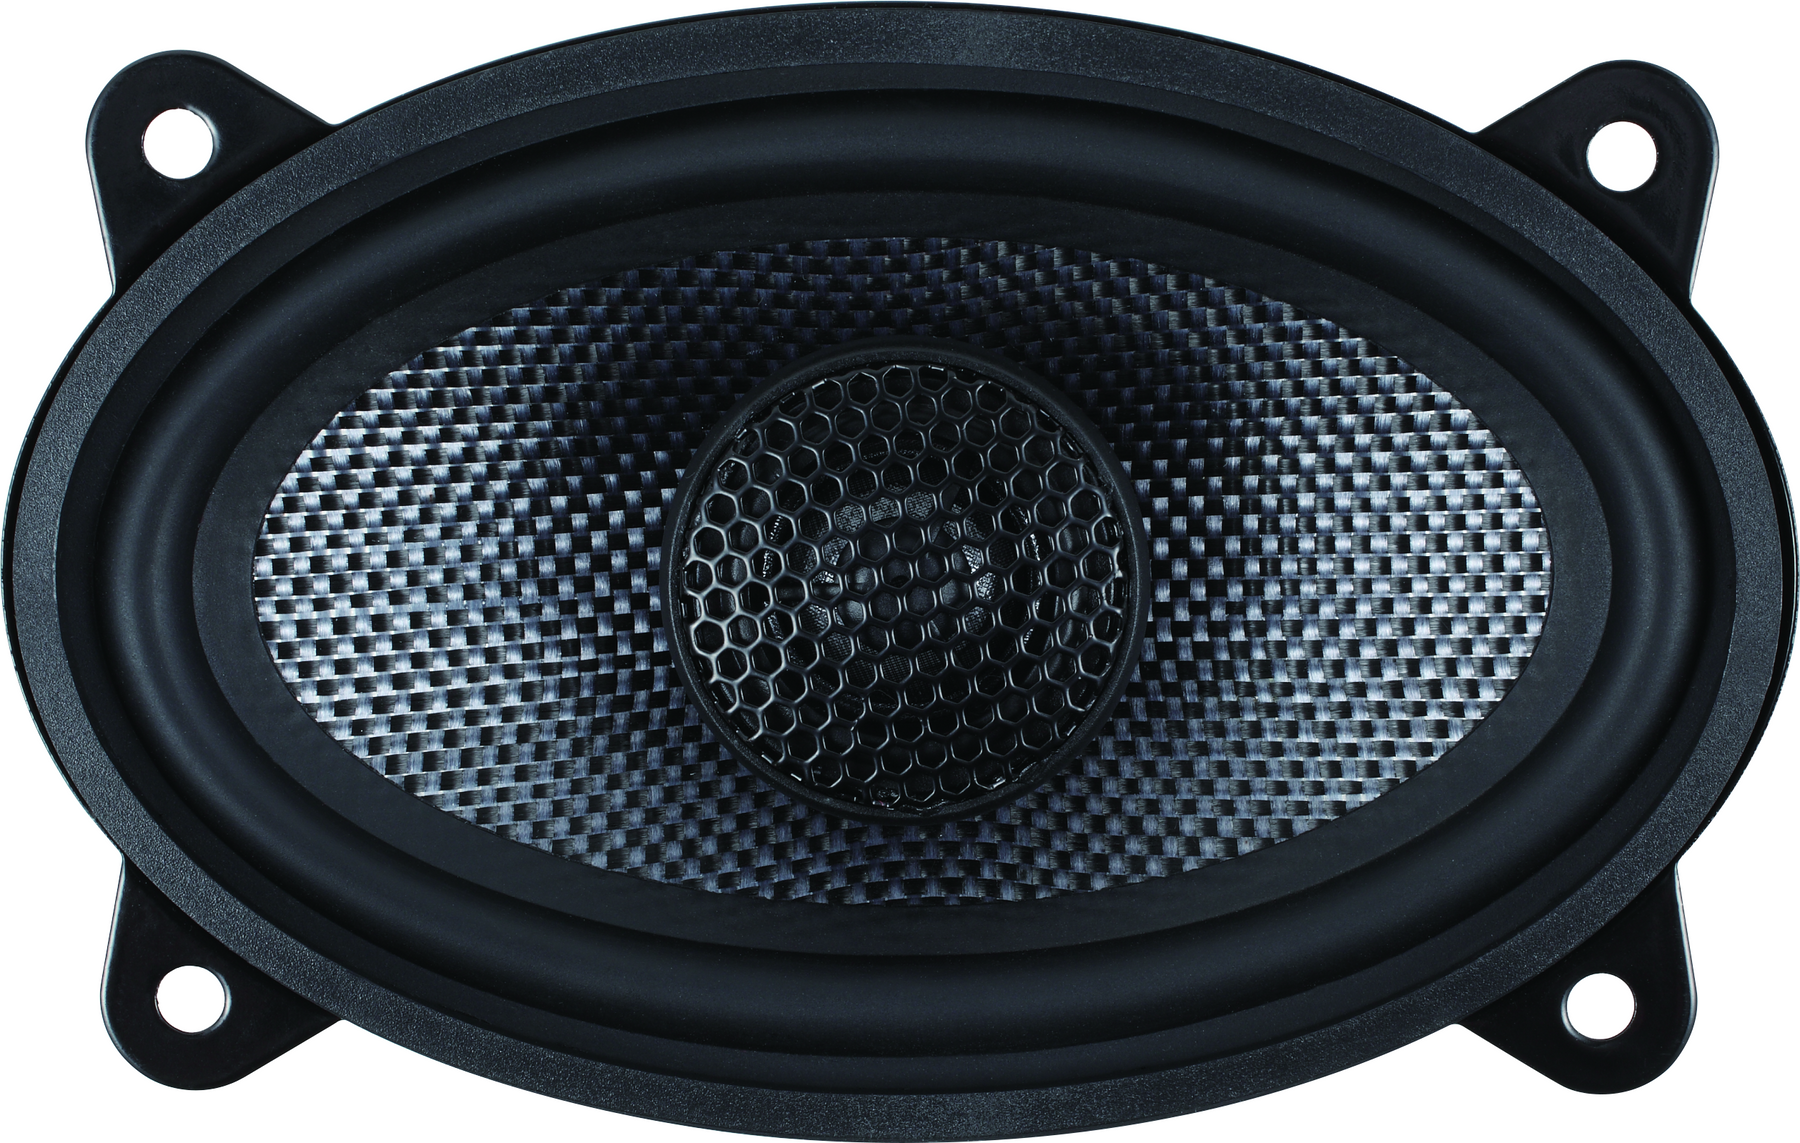 ATG ATG-TS462 - ATG Audio Transcend Series 4X6" Coaxial Speakers